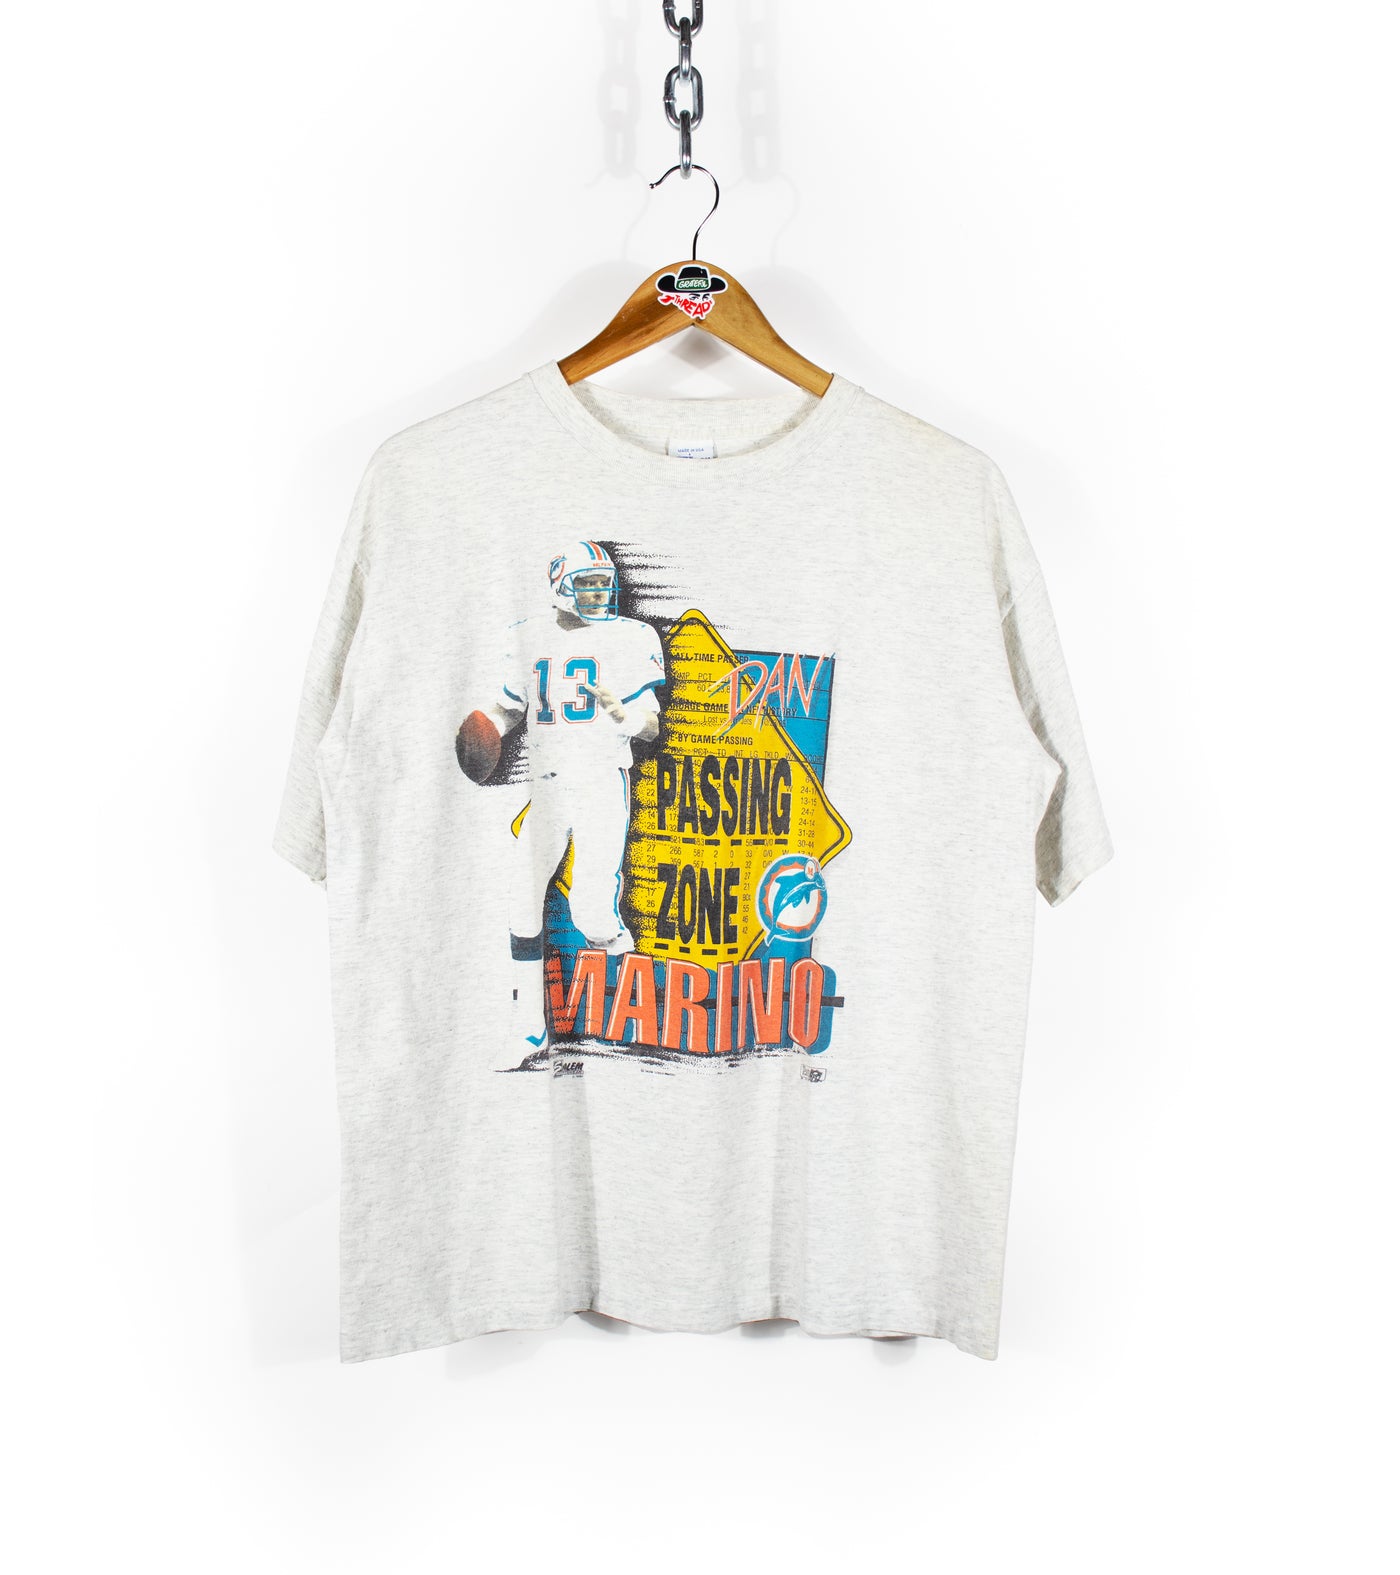 Vintage 1991 Dan Marino Salem Sportswear Passing Zone T-Shirt